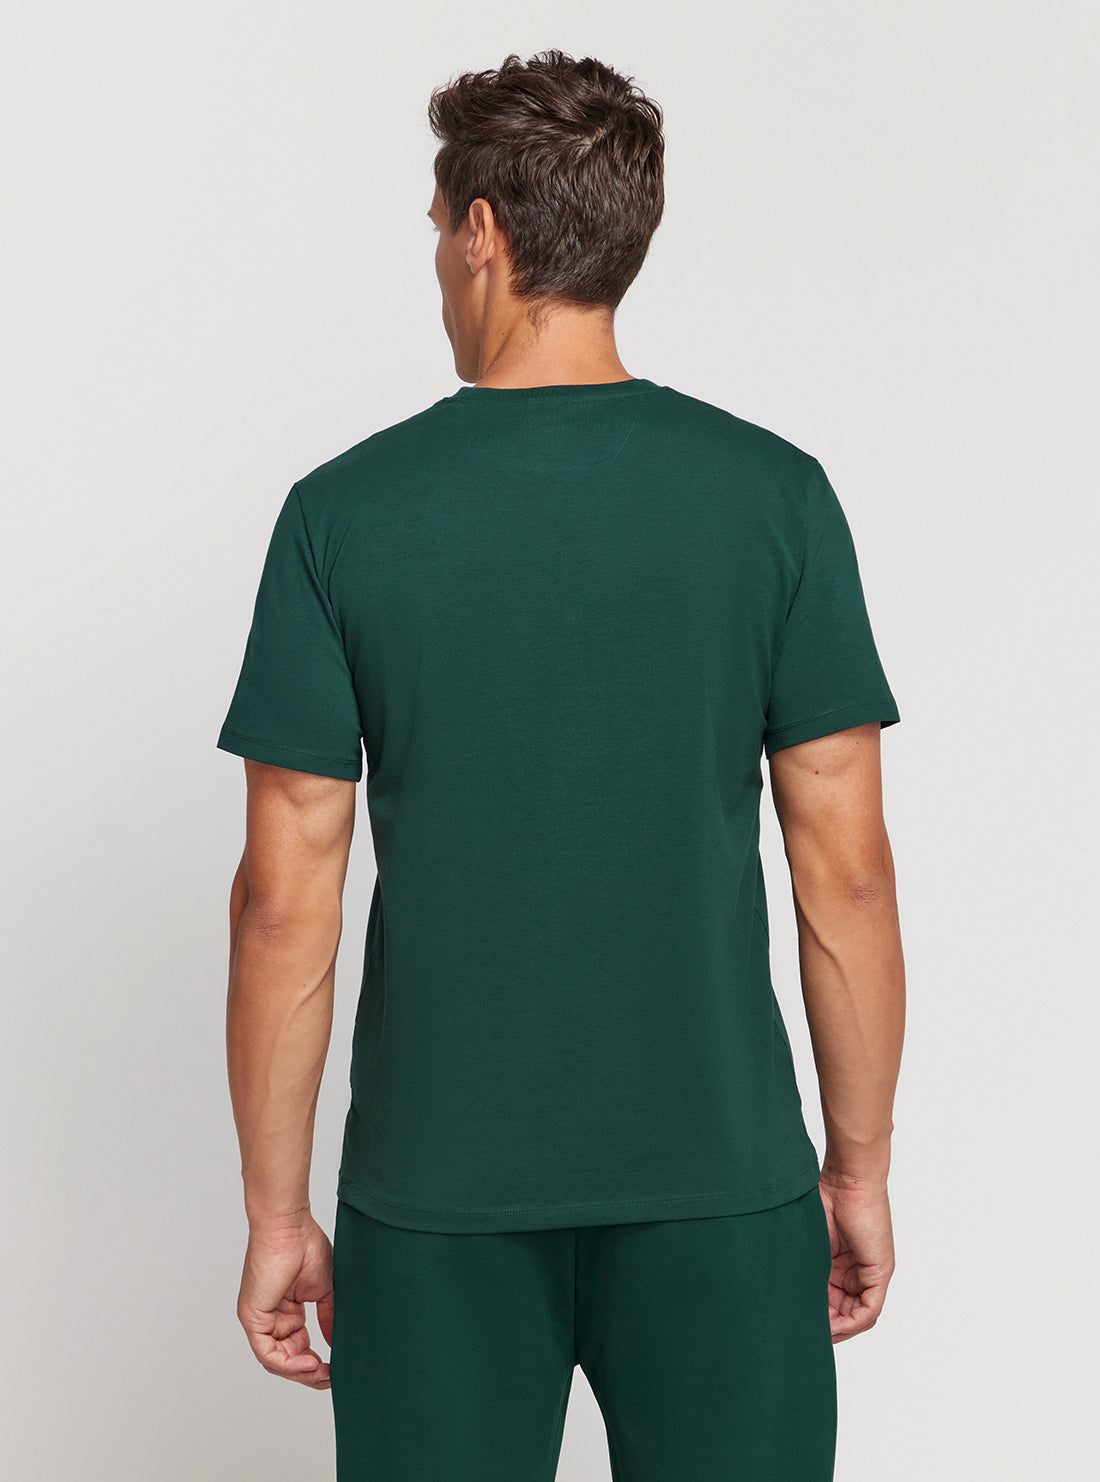 GUESS Green Gaston Short Sleeve T-Shirt back view